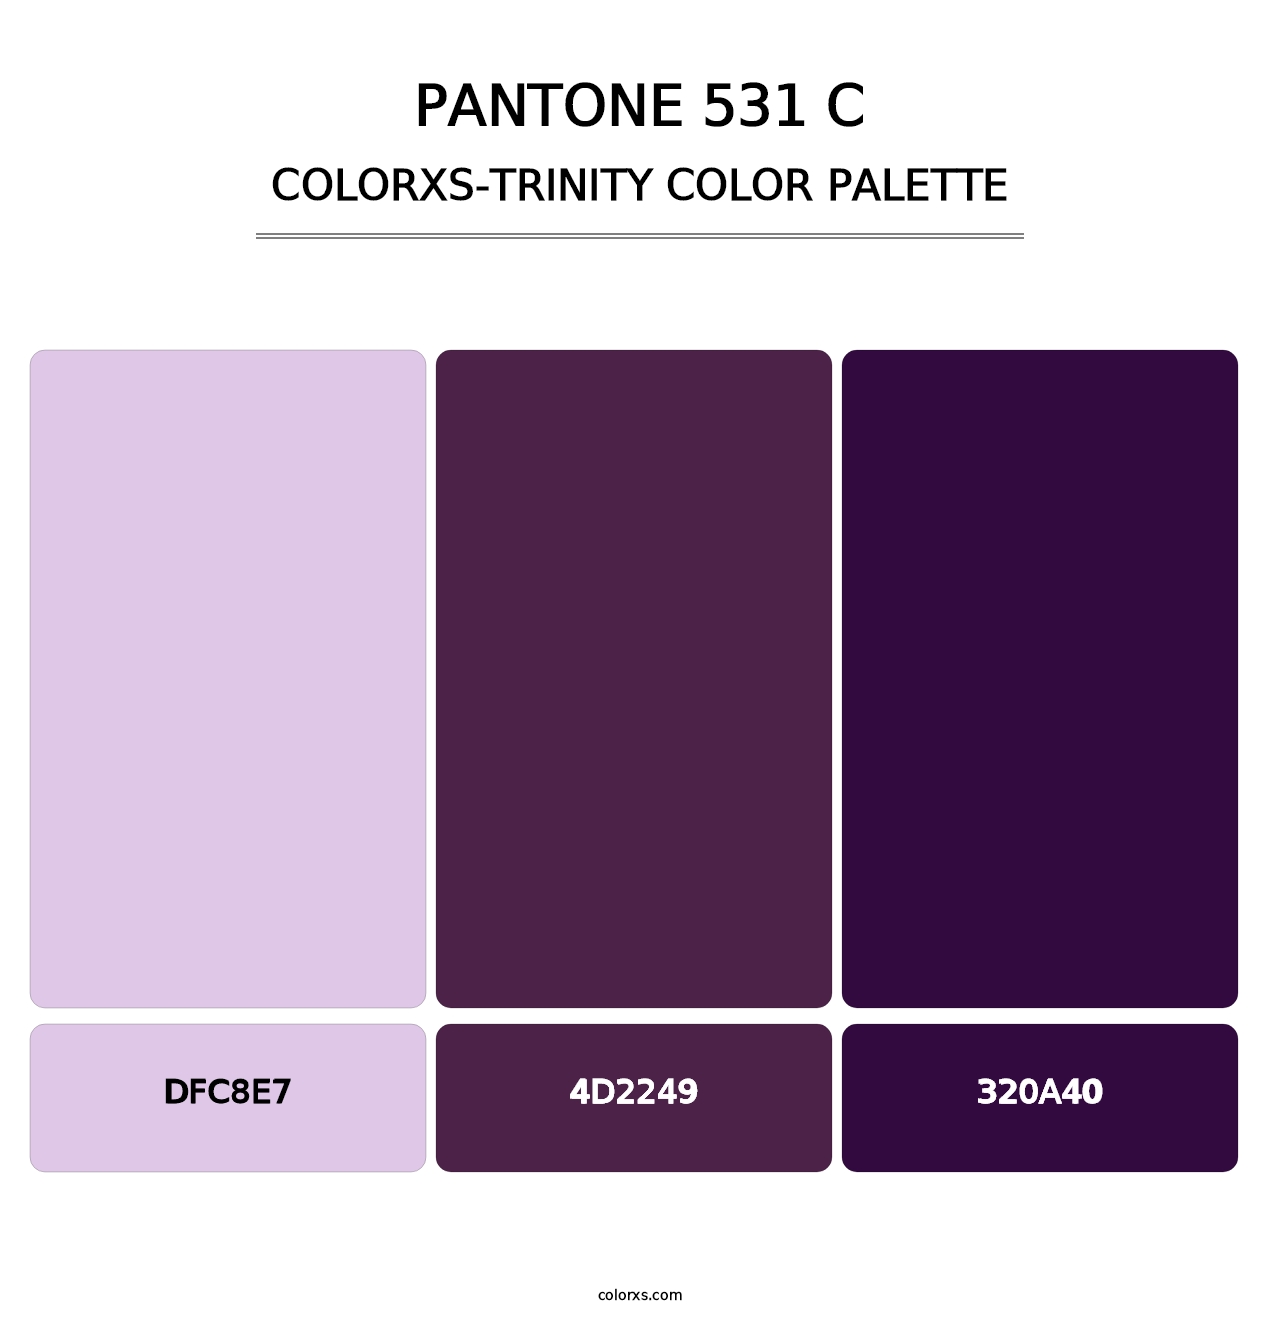 PANTONE 531 C - Colorxs Trinity Palette